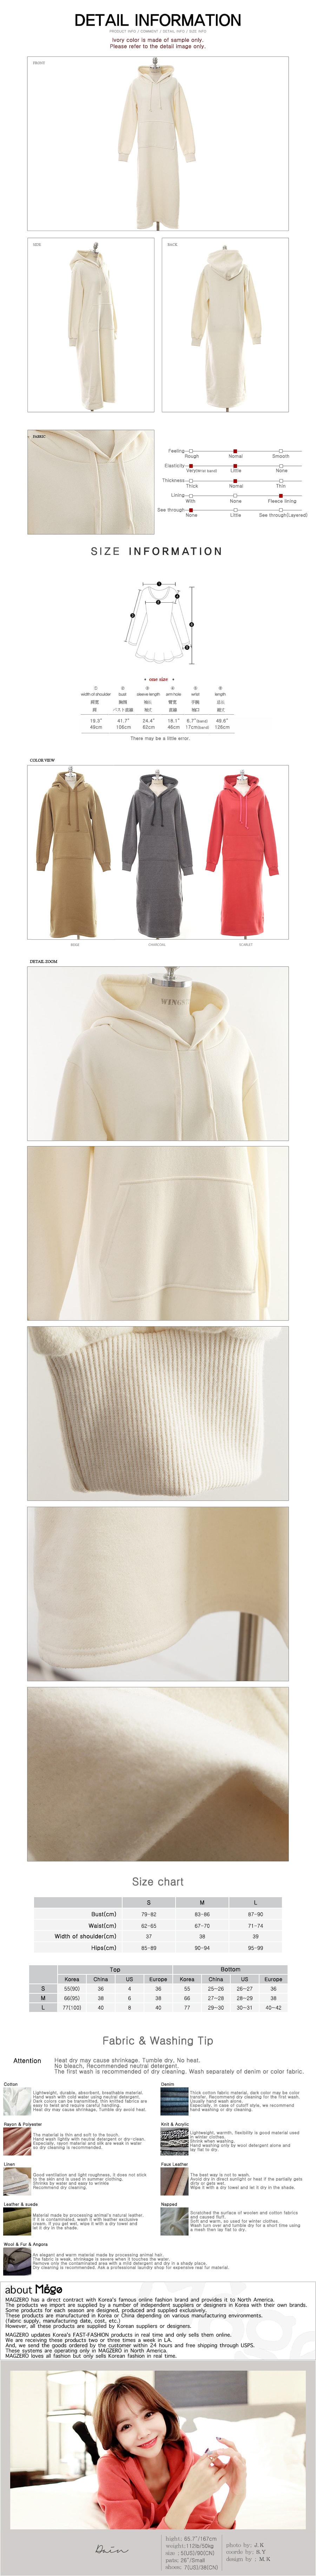 KOREA Hoodie Sweatshirt Long Dress(Fleece Lining) Charcoal One Size(Free) [Free Shipping]